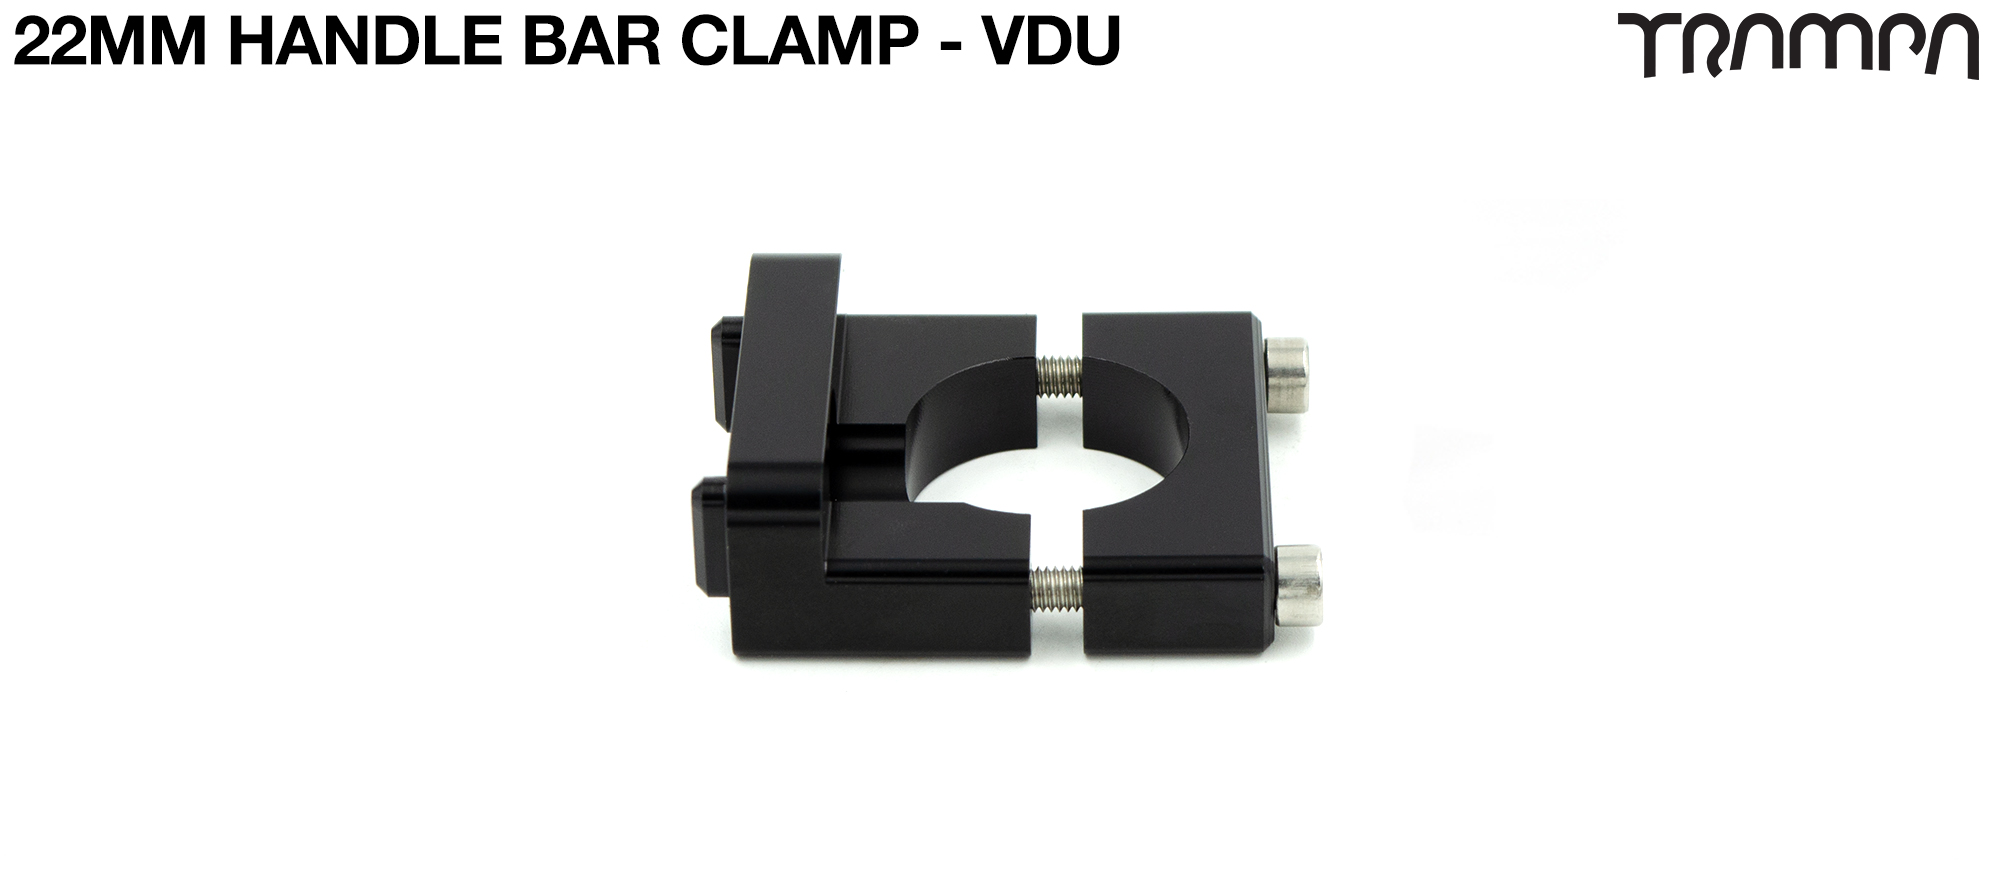 22mm Handle Bar Clamp to mount the VESC DISPLAY UNIT - VDU Display